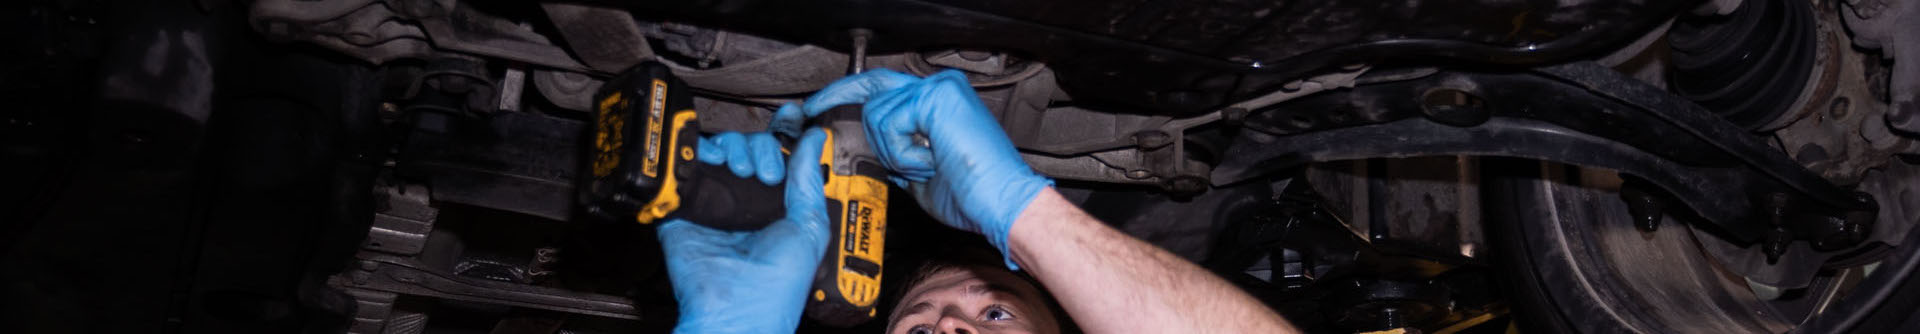 https://autotechrecruit.co.uk/wp-content/uploads/2019/07/Autotech-Recruit-Technician-checking-tyre-pressure.jpg